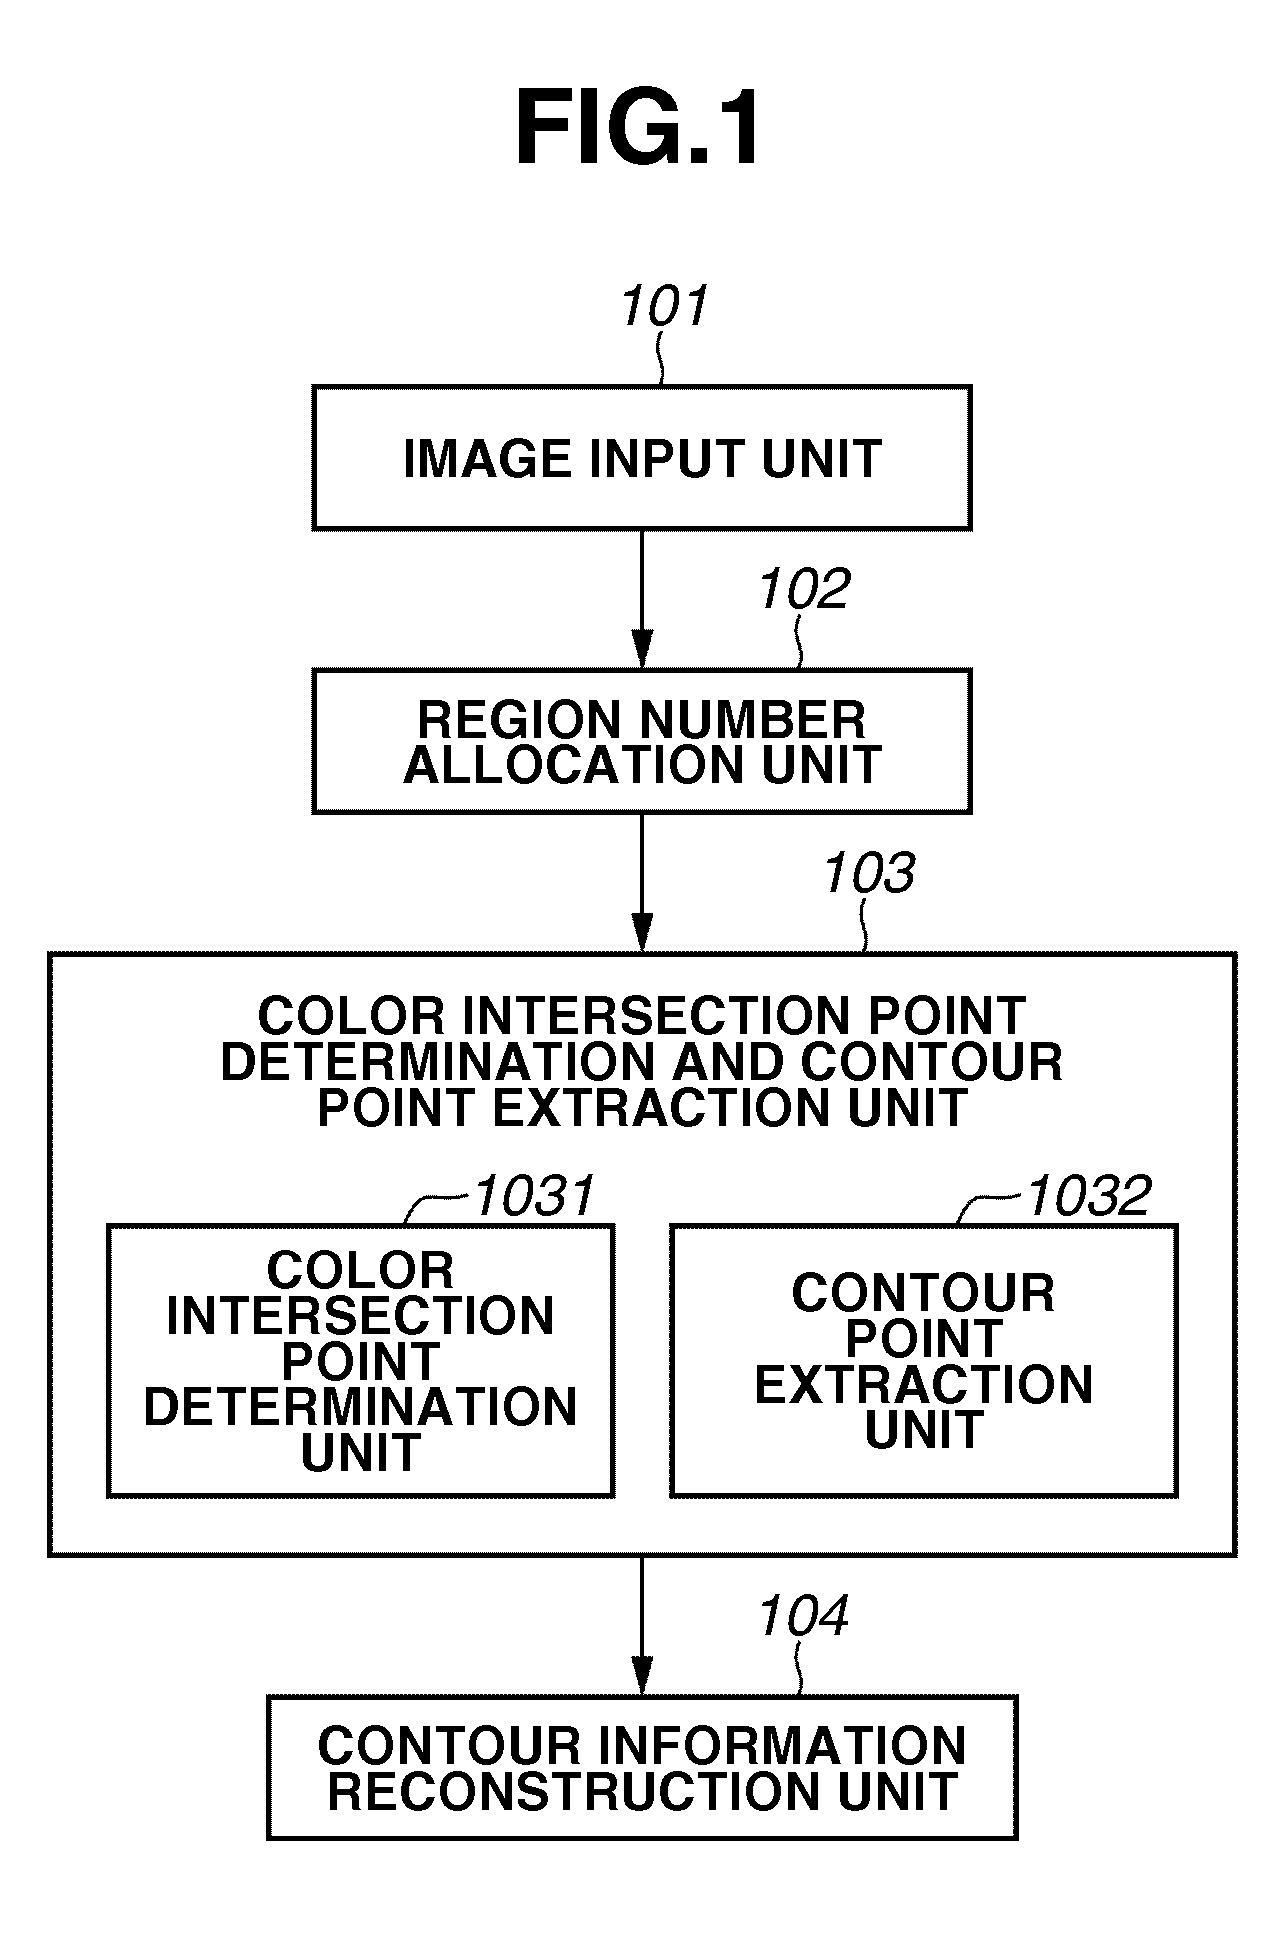 Image processing apparatus, image processing method, and storage medium